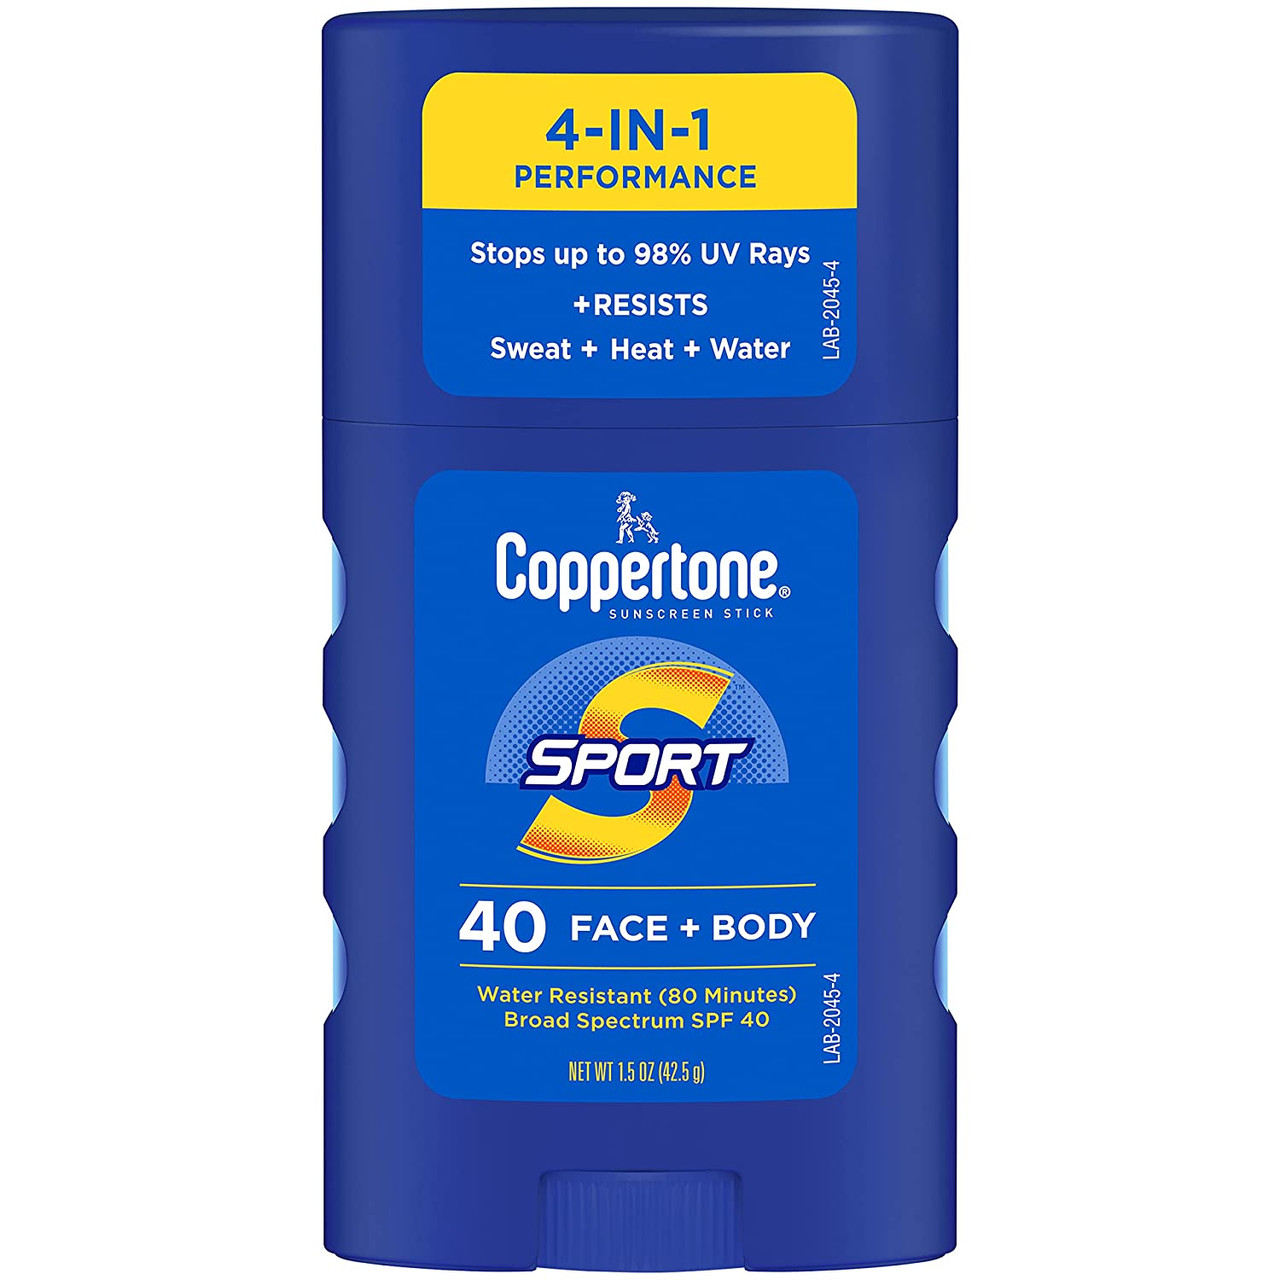 Sunscreen Stick SPF 50 for Face